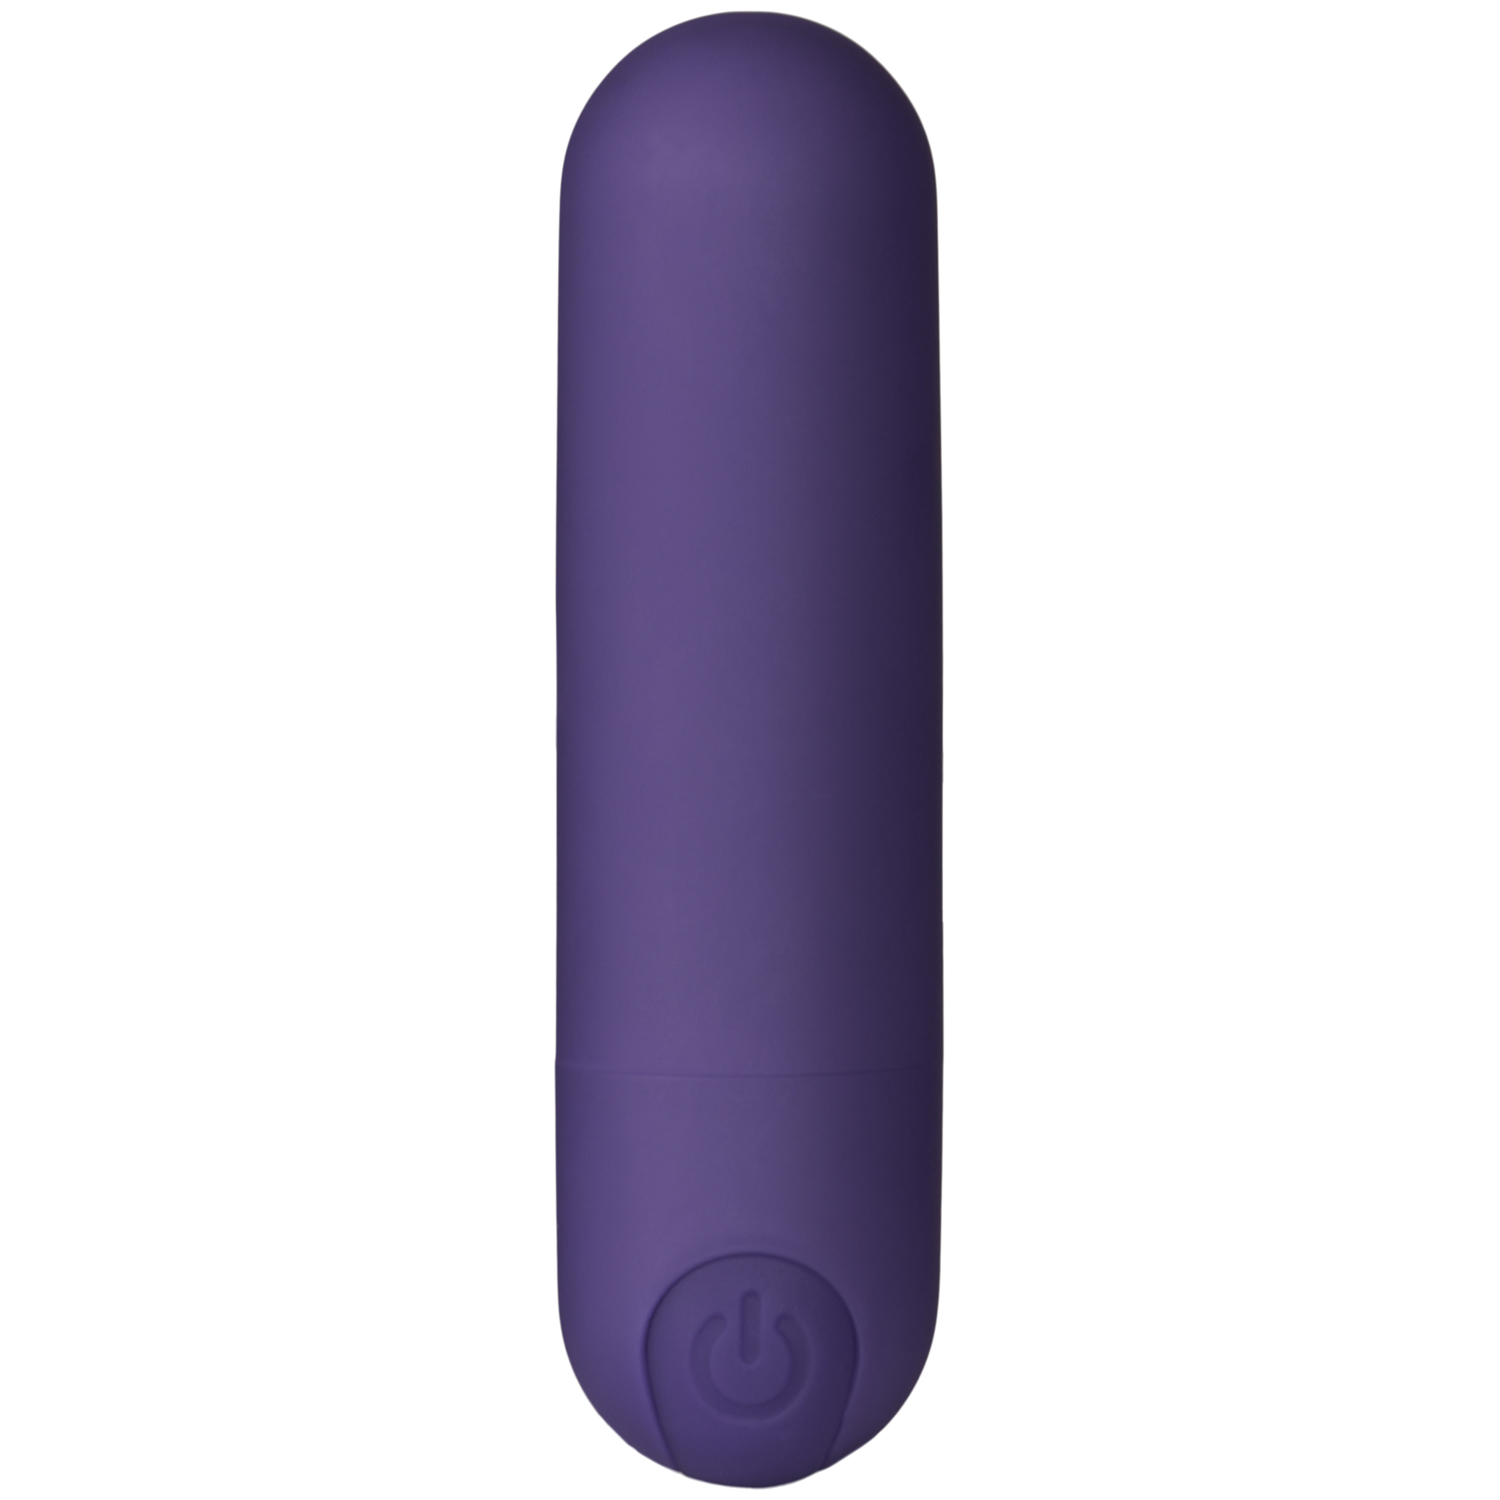 Sinful Passion Purple Opladelig PowerBullet Vibrator     - Lilla thumbnail